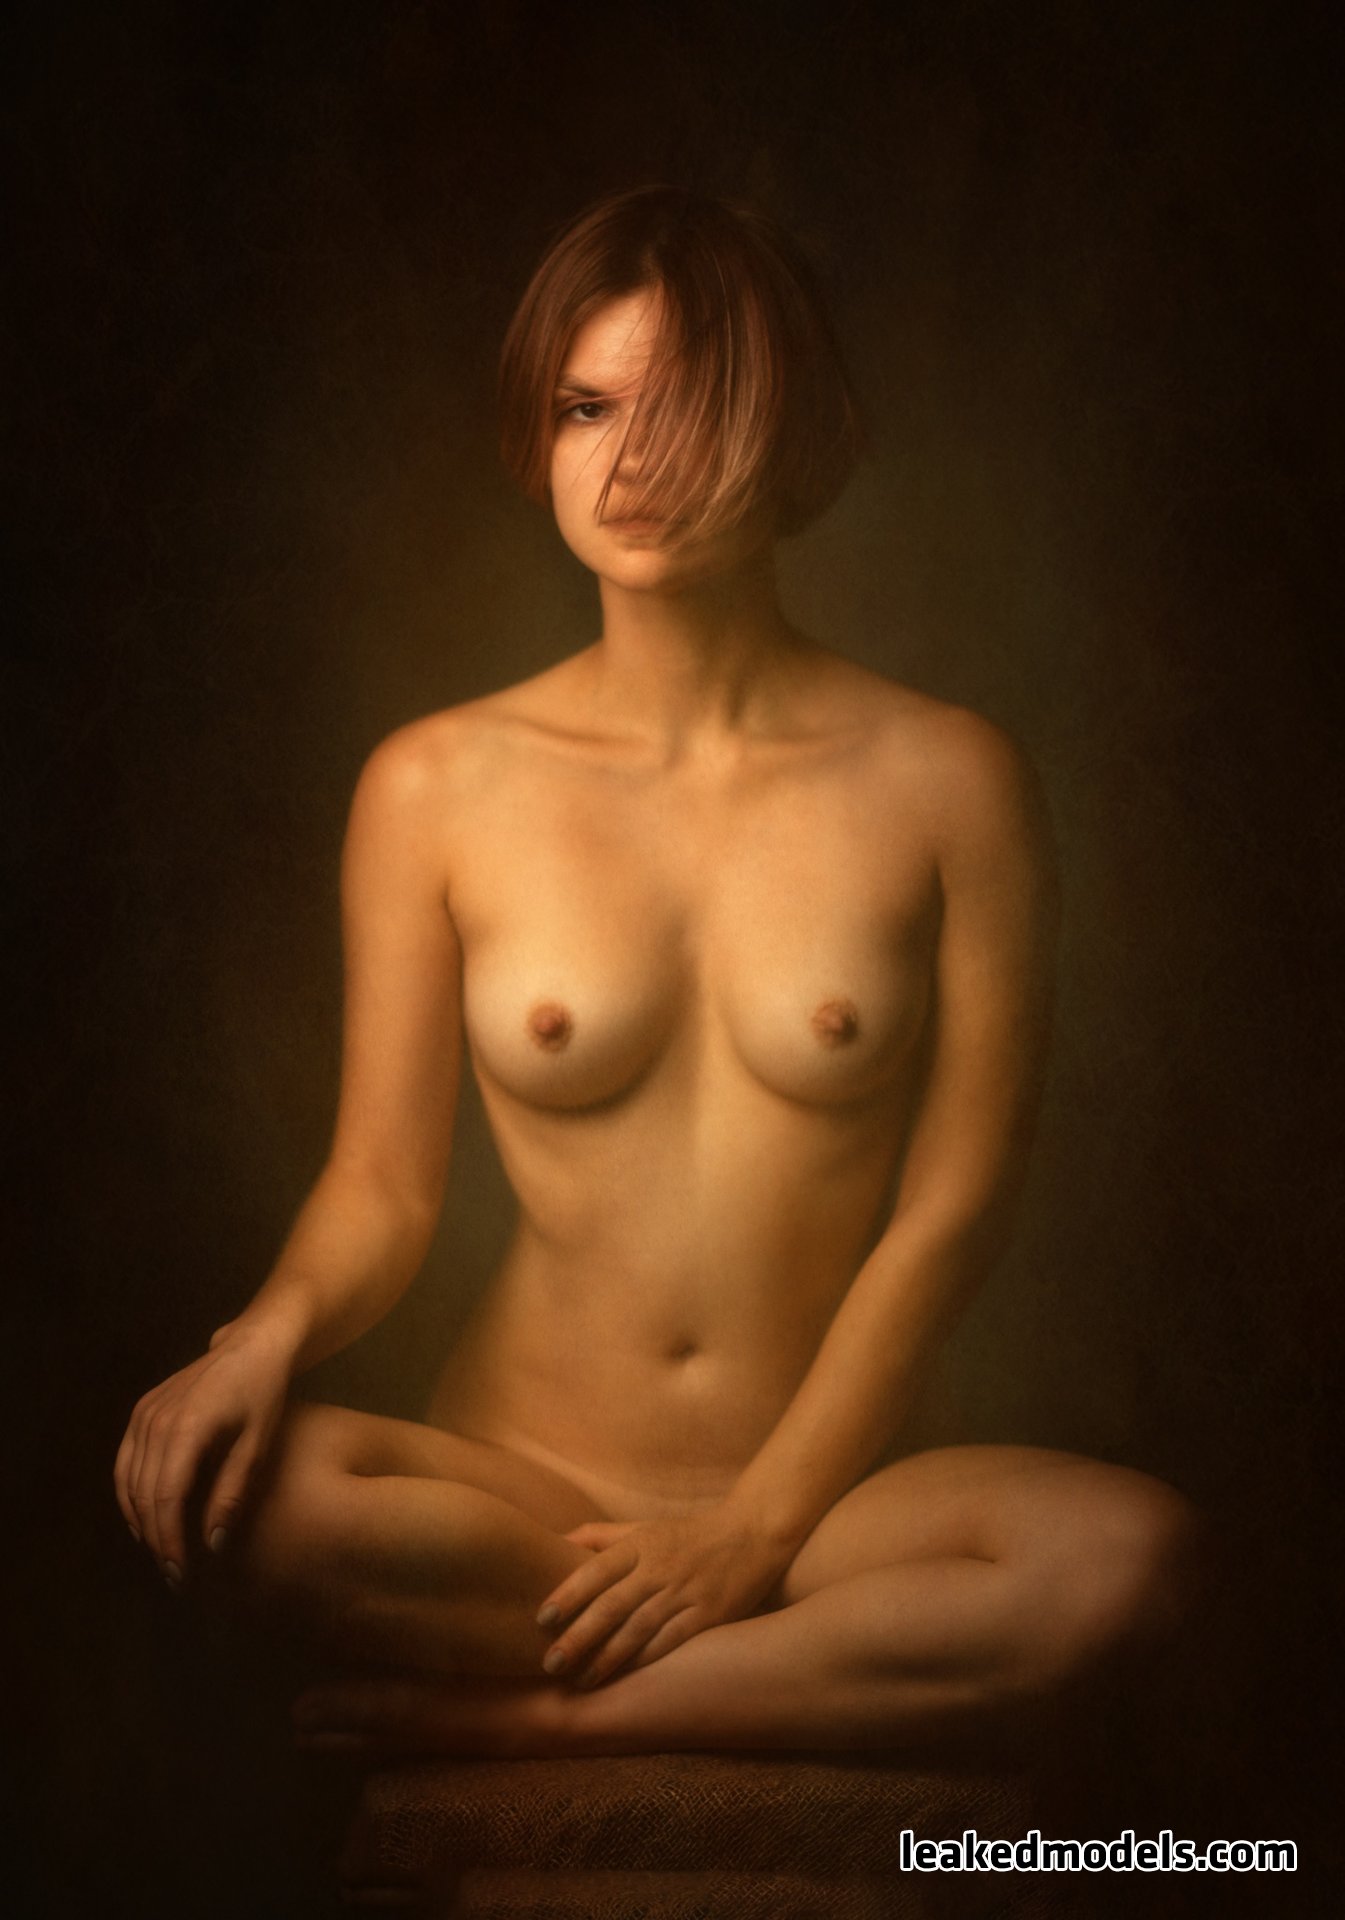 yudith lis leaked nude leakedmodels.com 0028 - Judit Lis – judit_lis OnlyFans Nude Leaks (33 Photos)